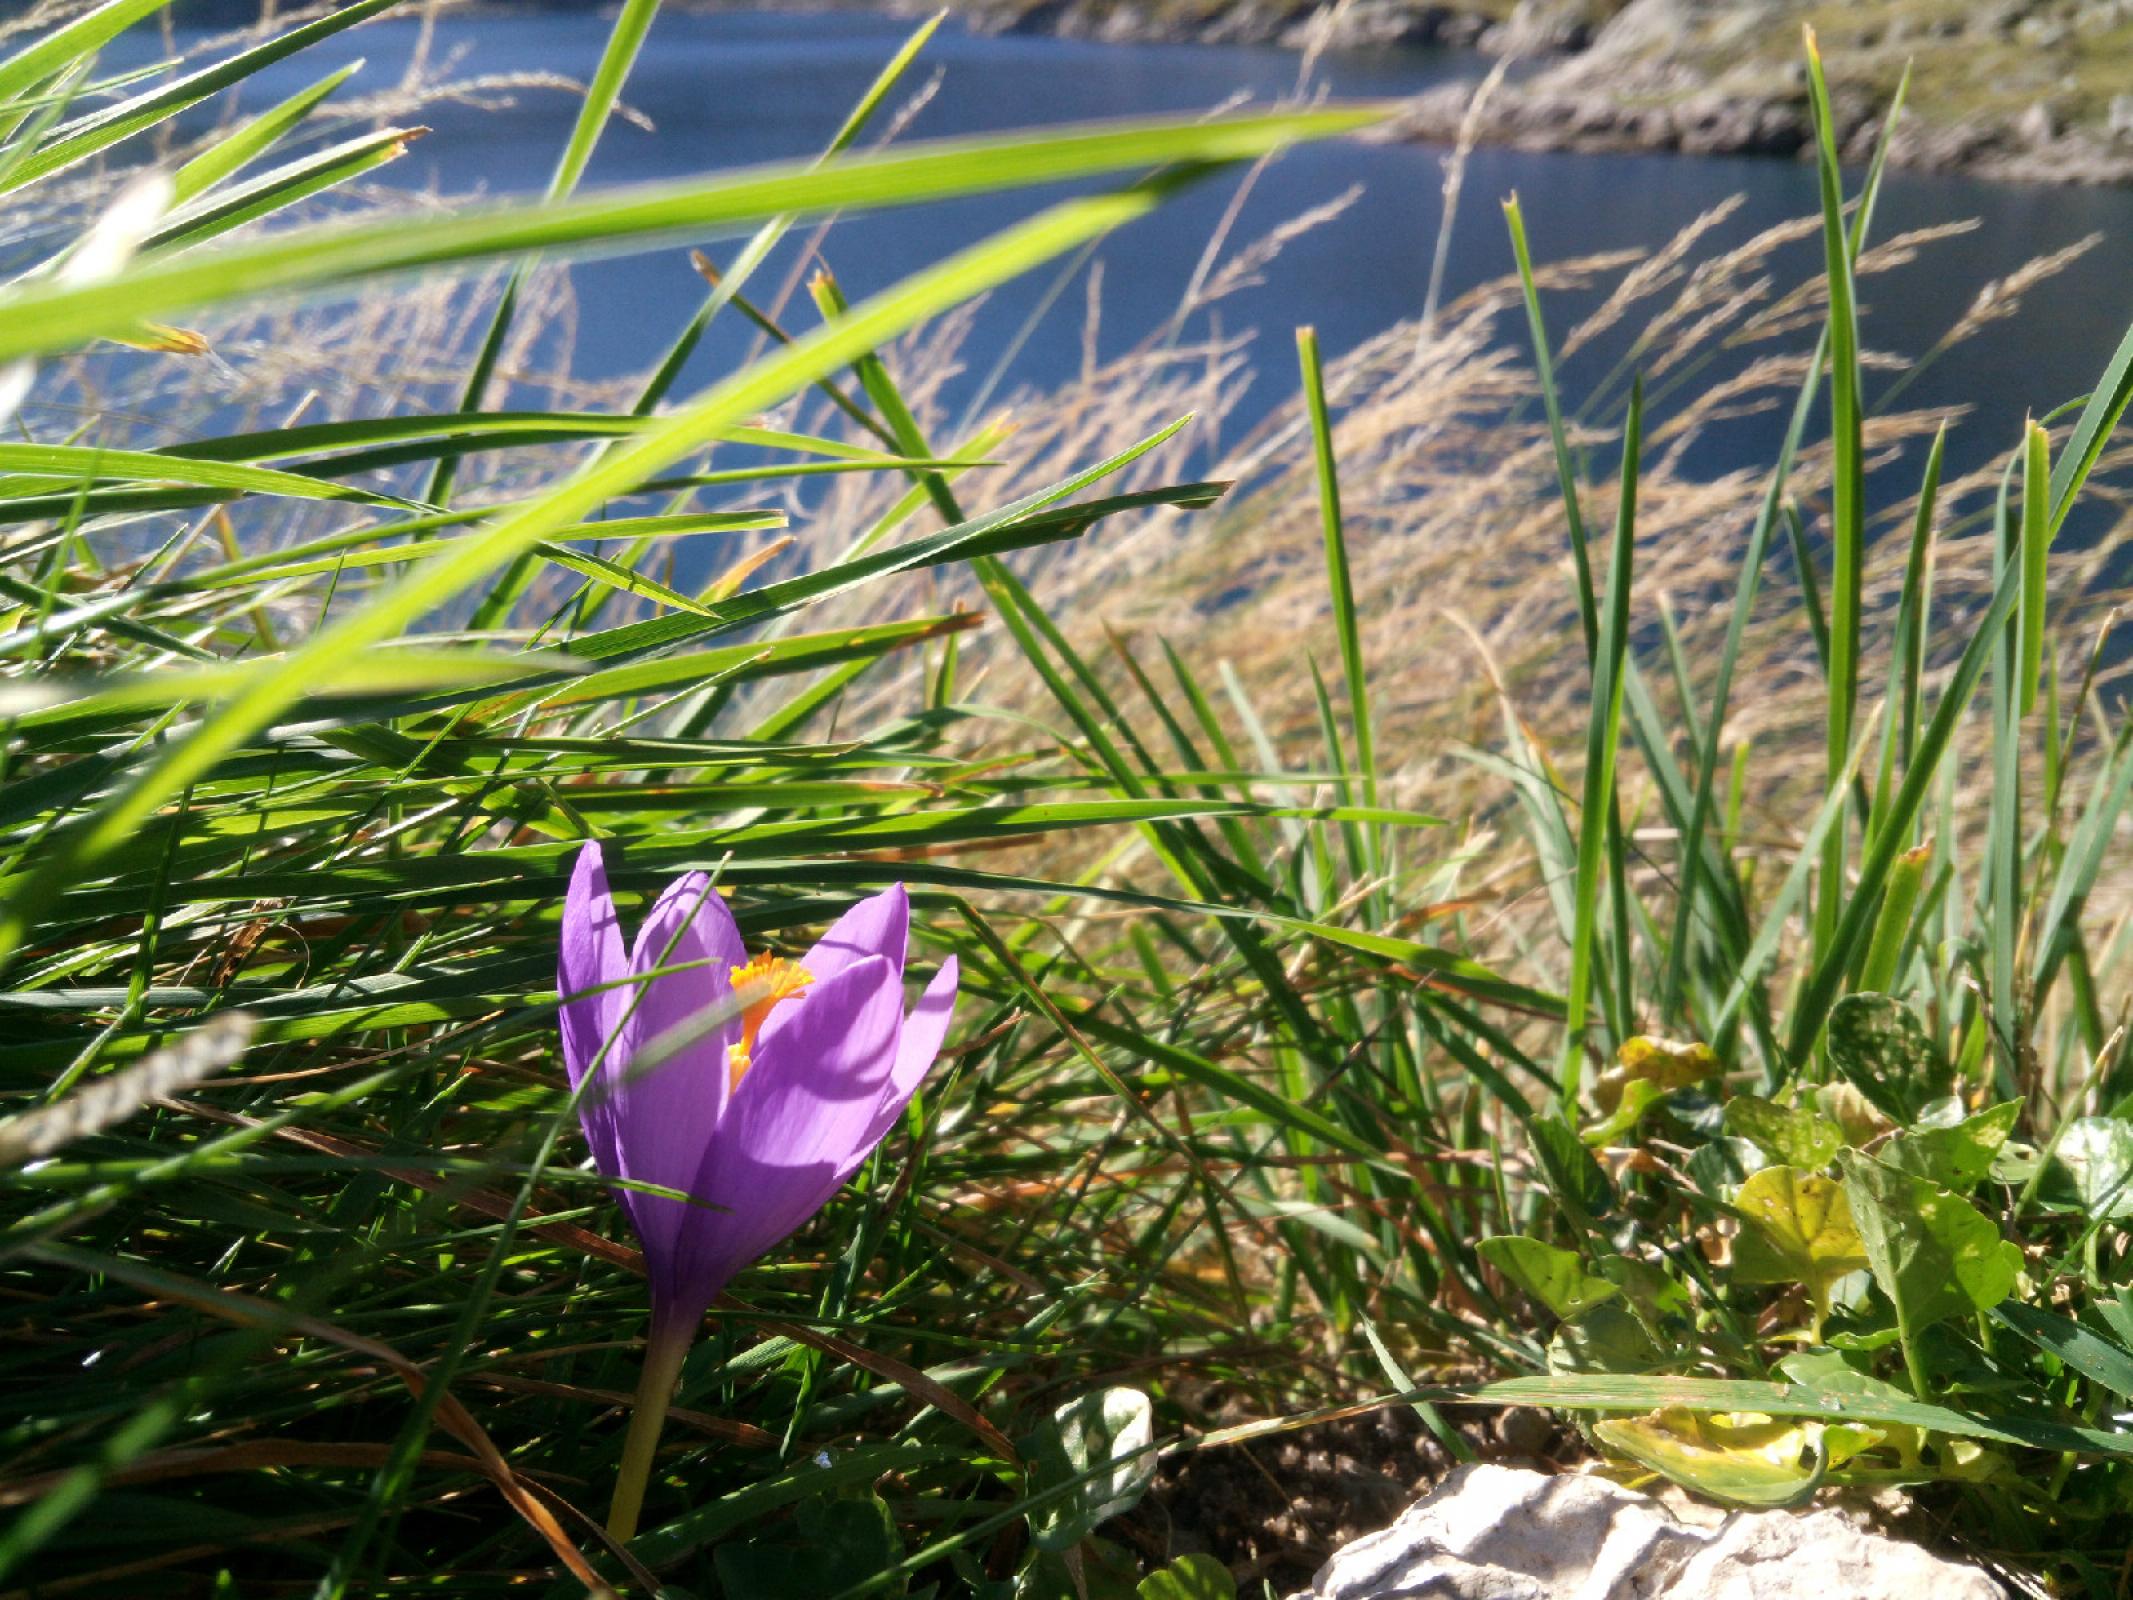 Flor lila típica de la zona